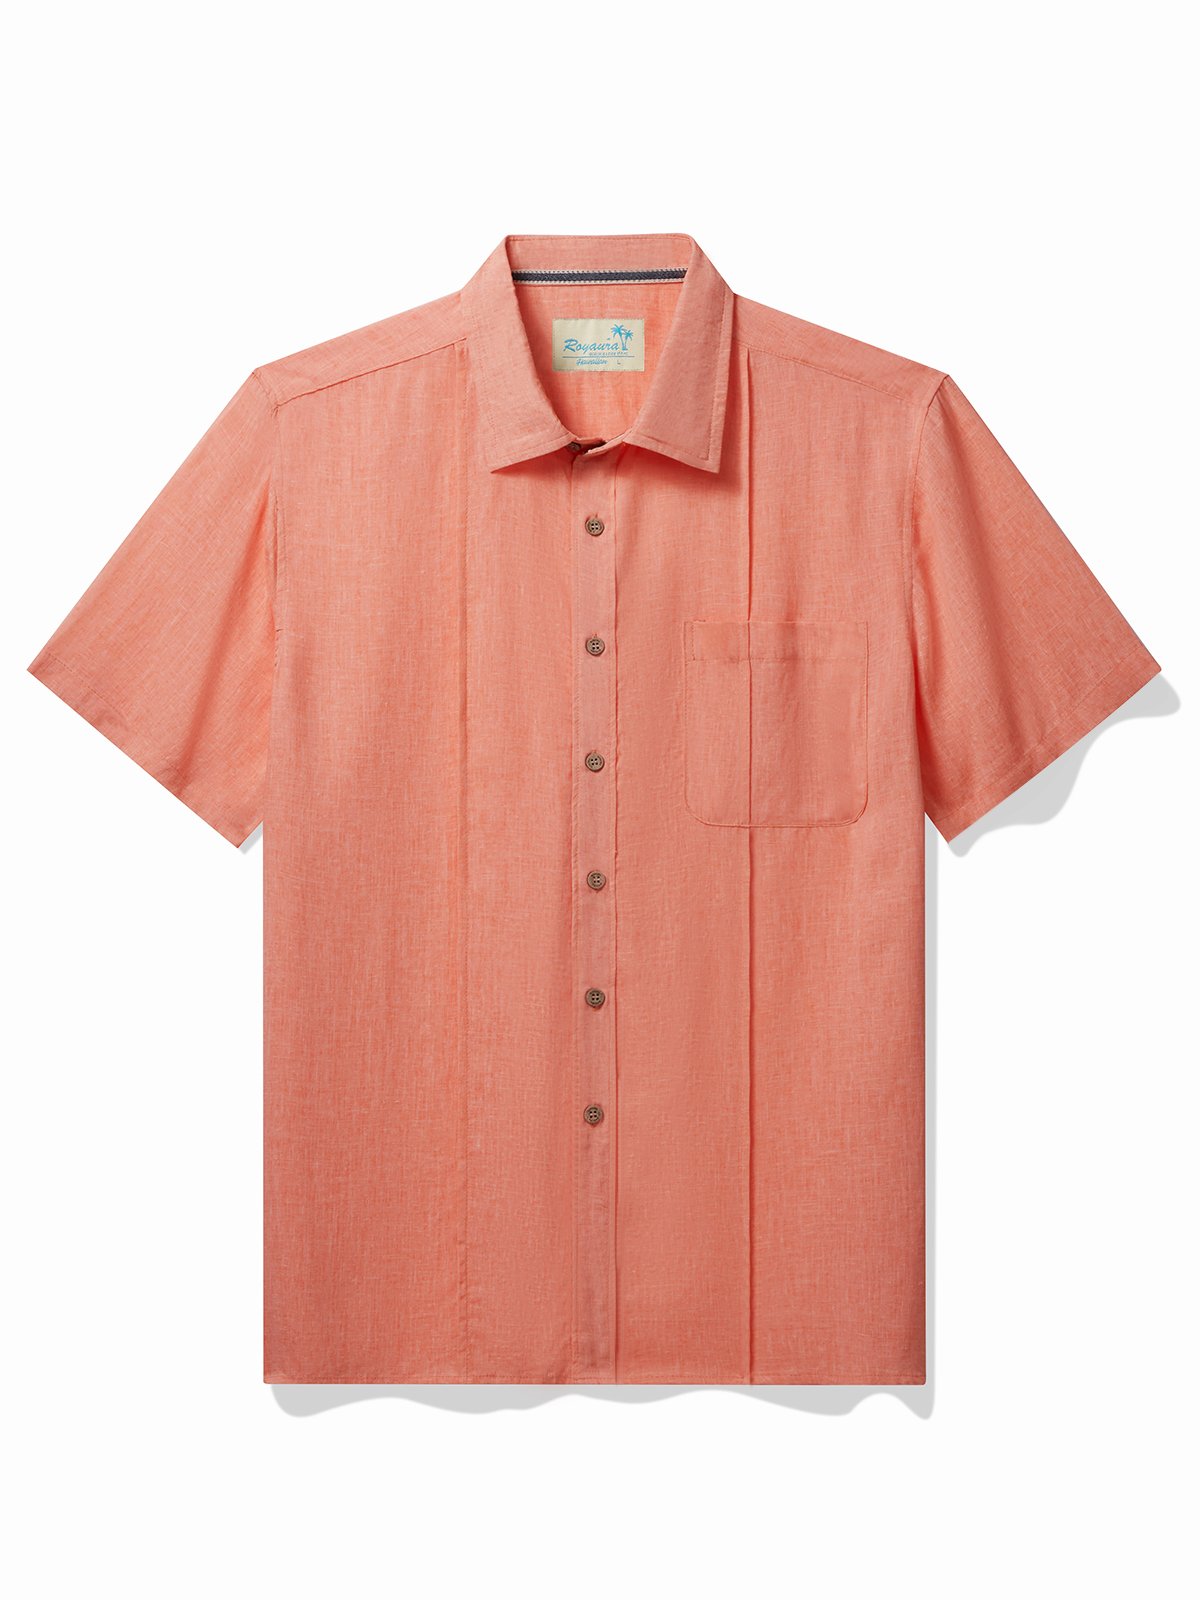 Royaura® Linen Blend Men's Hawaiian Shirt Pocket Comfortable Breathable Guayabera Camp Shirt Big Tall